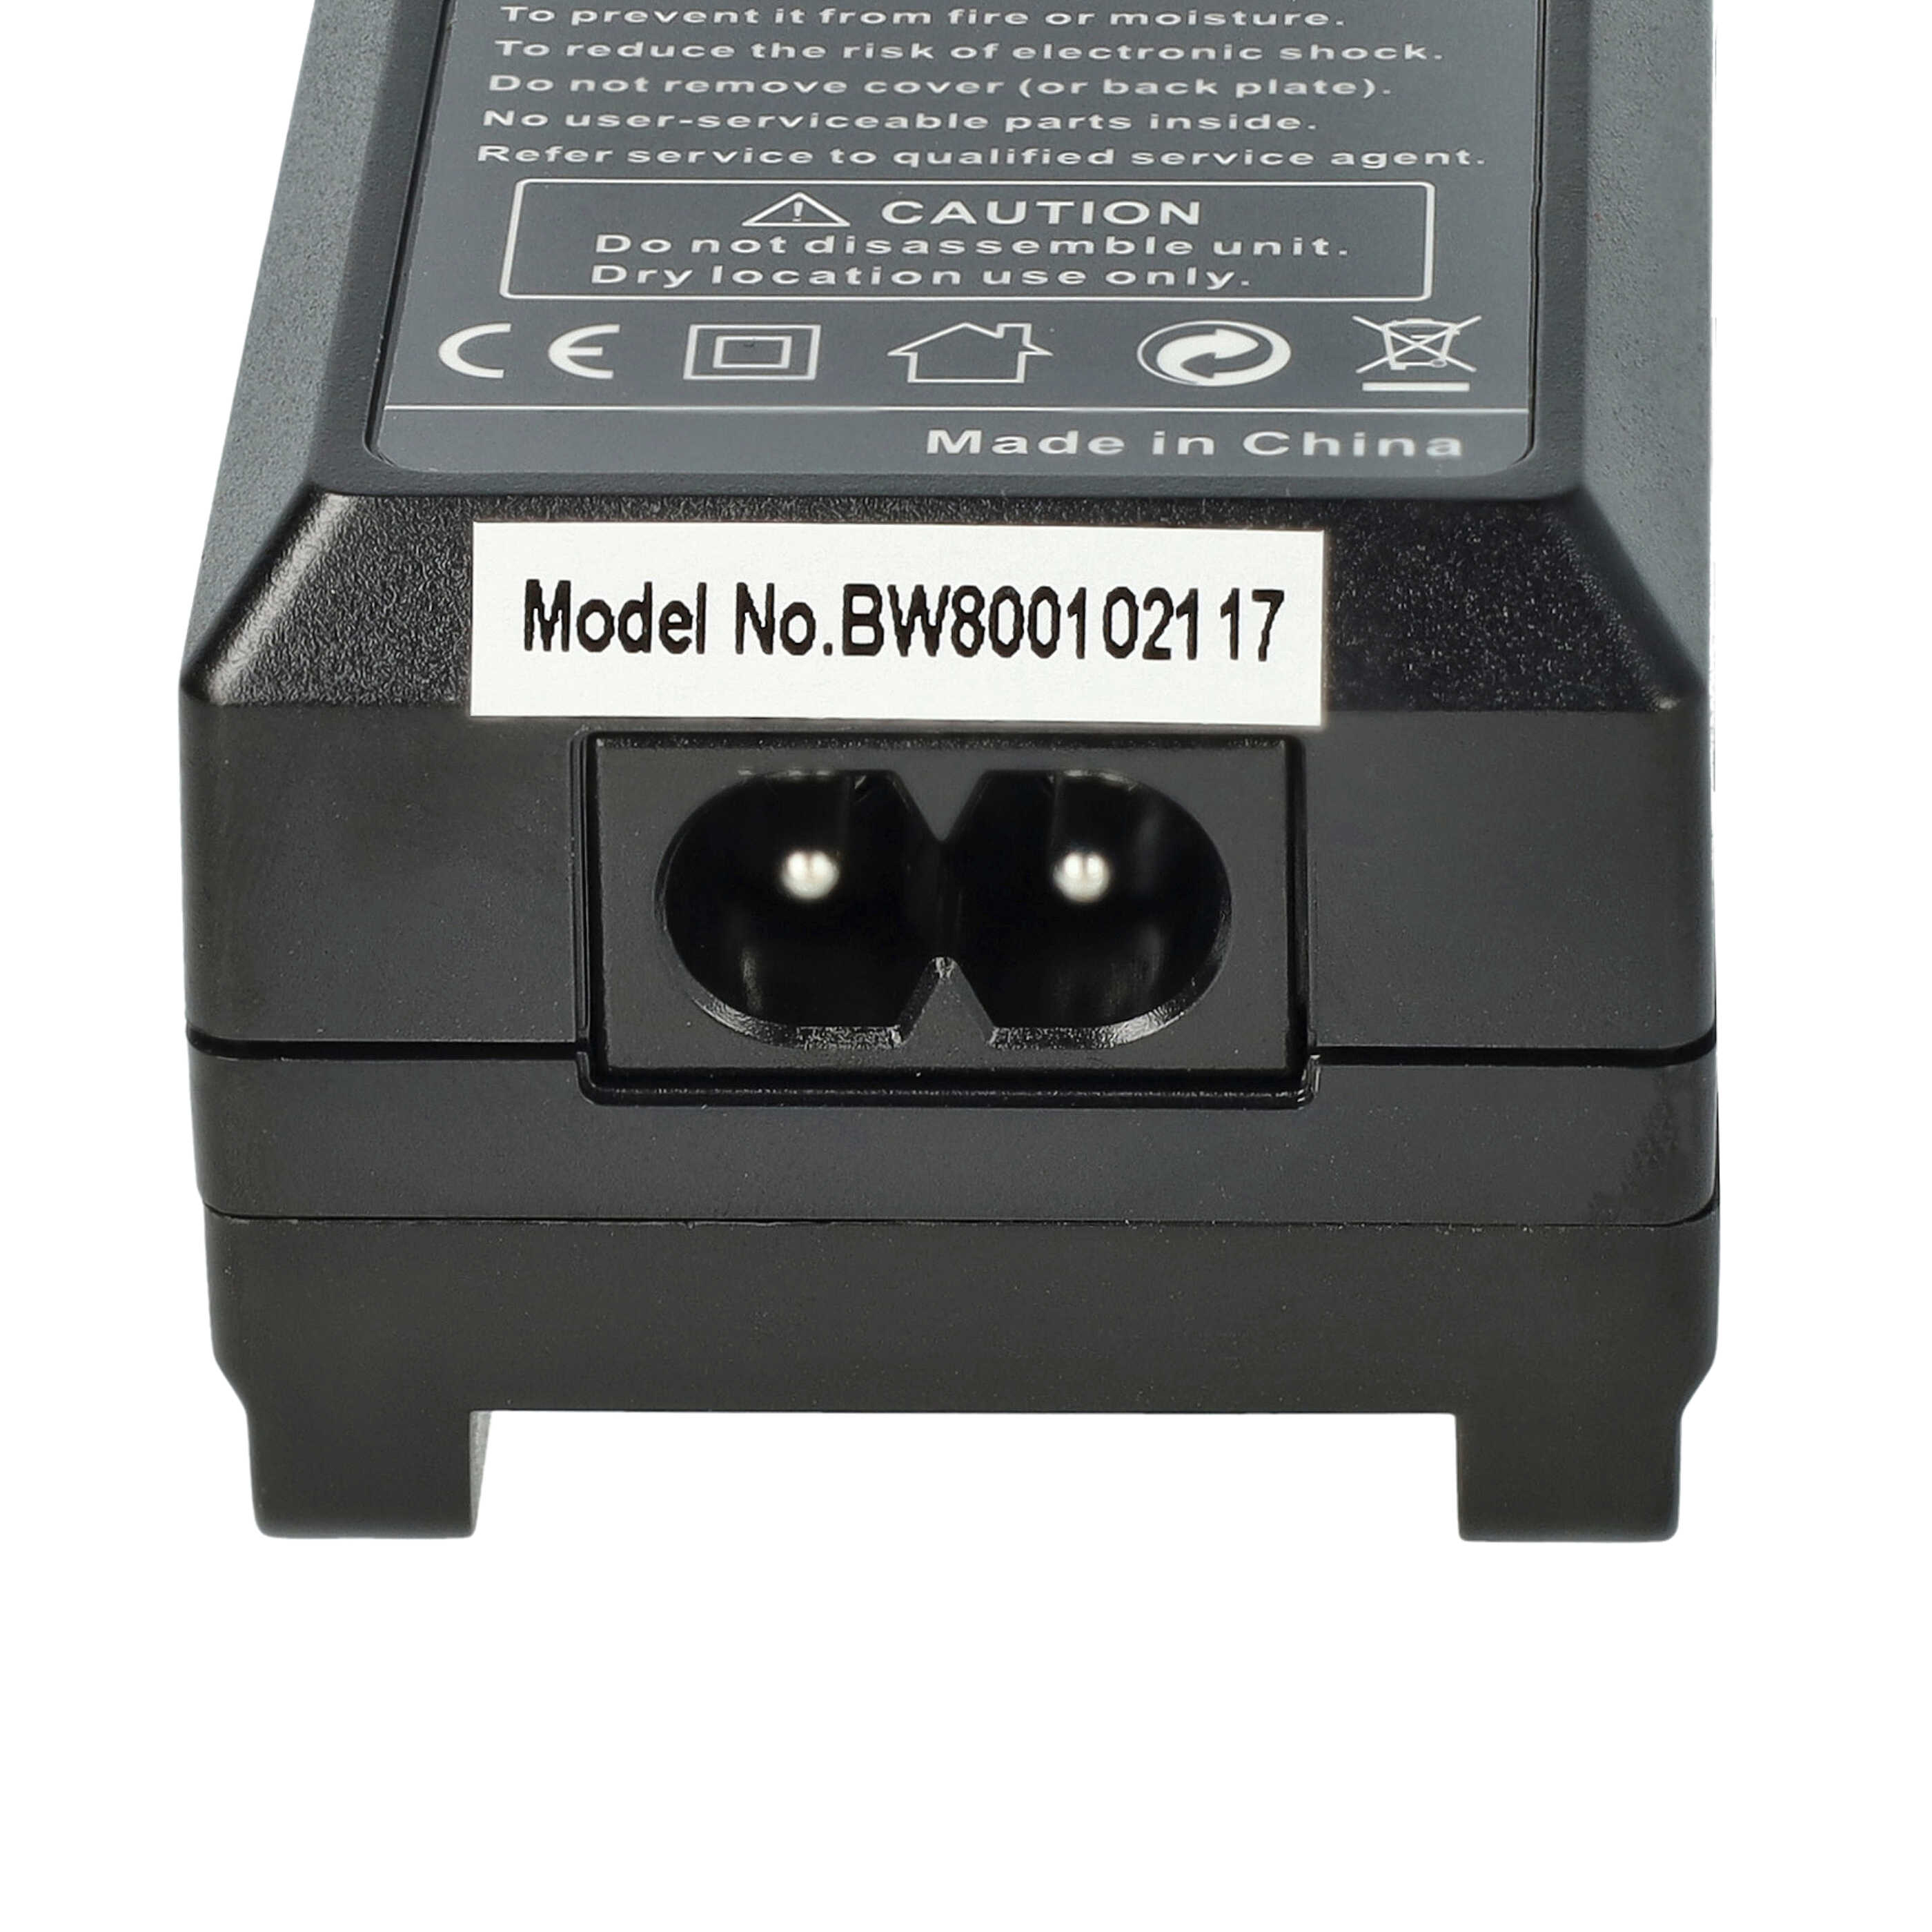 Battery Charger suitable for HC-V110 Camera etc. - 0.6 A, 4.2 V